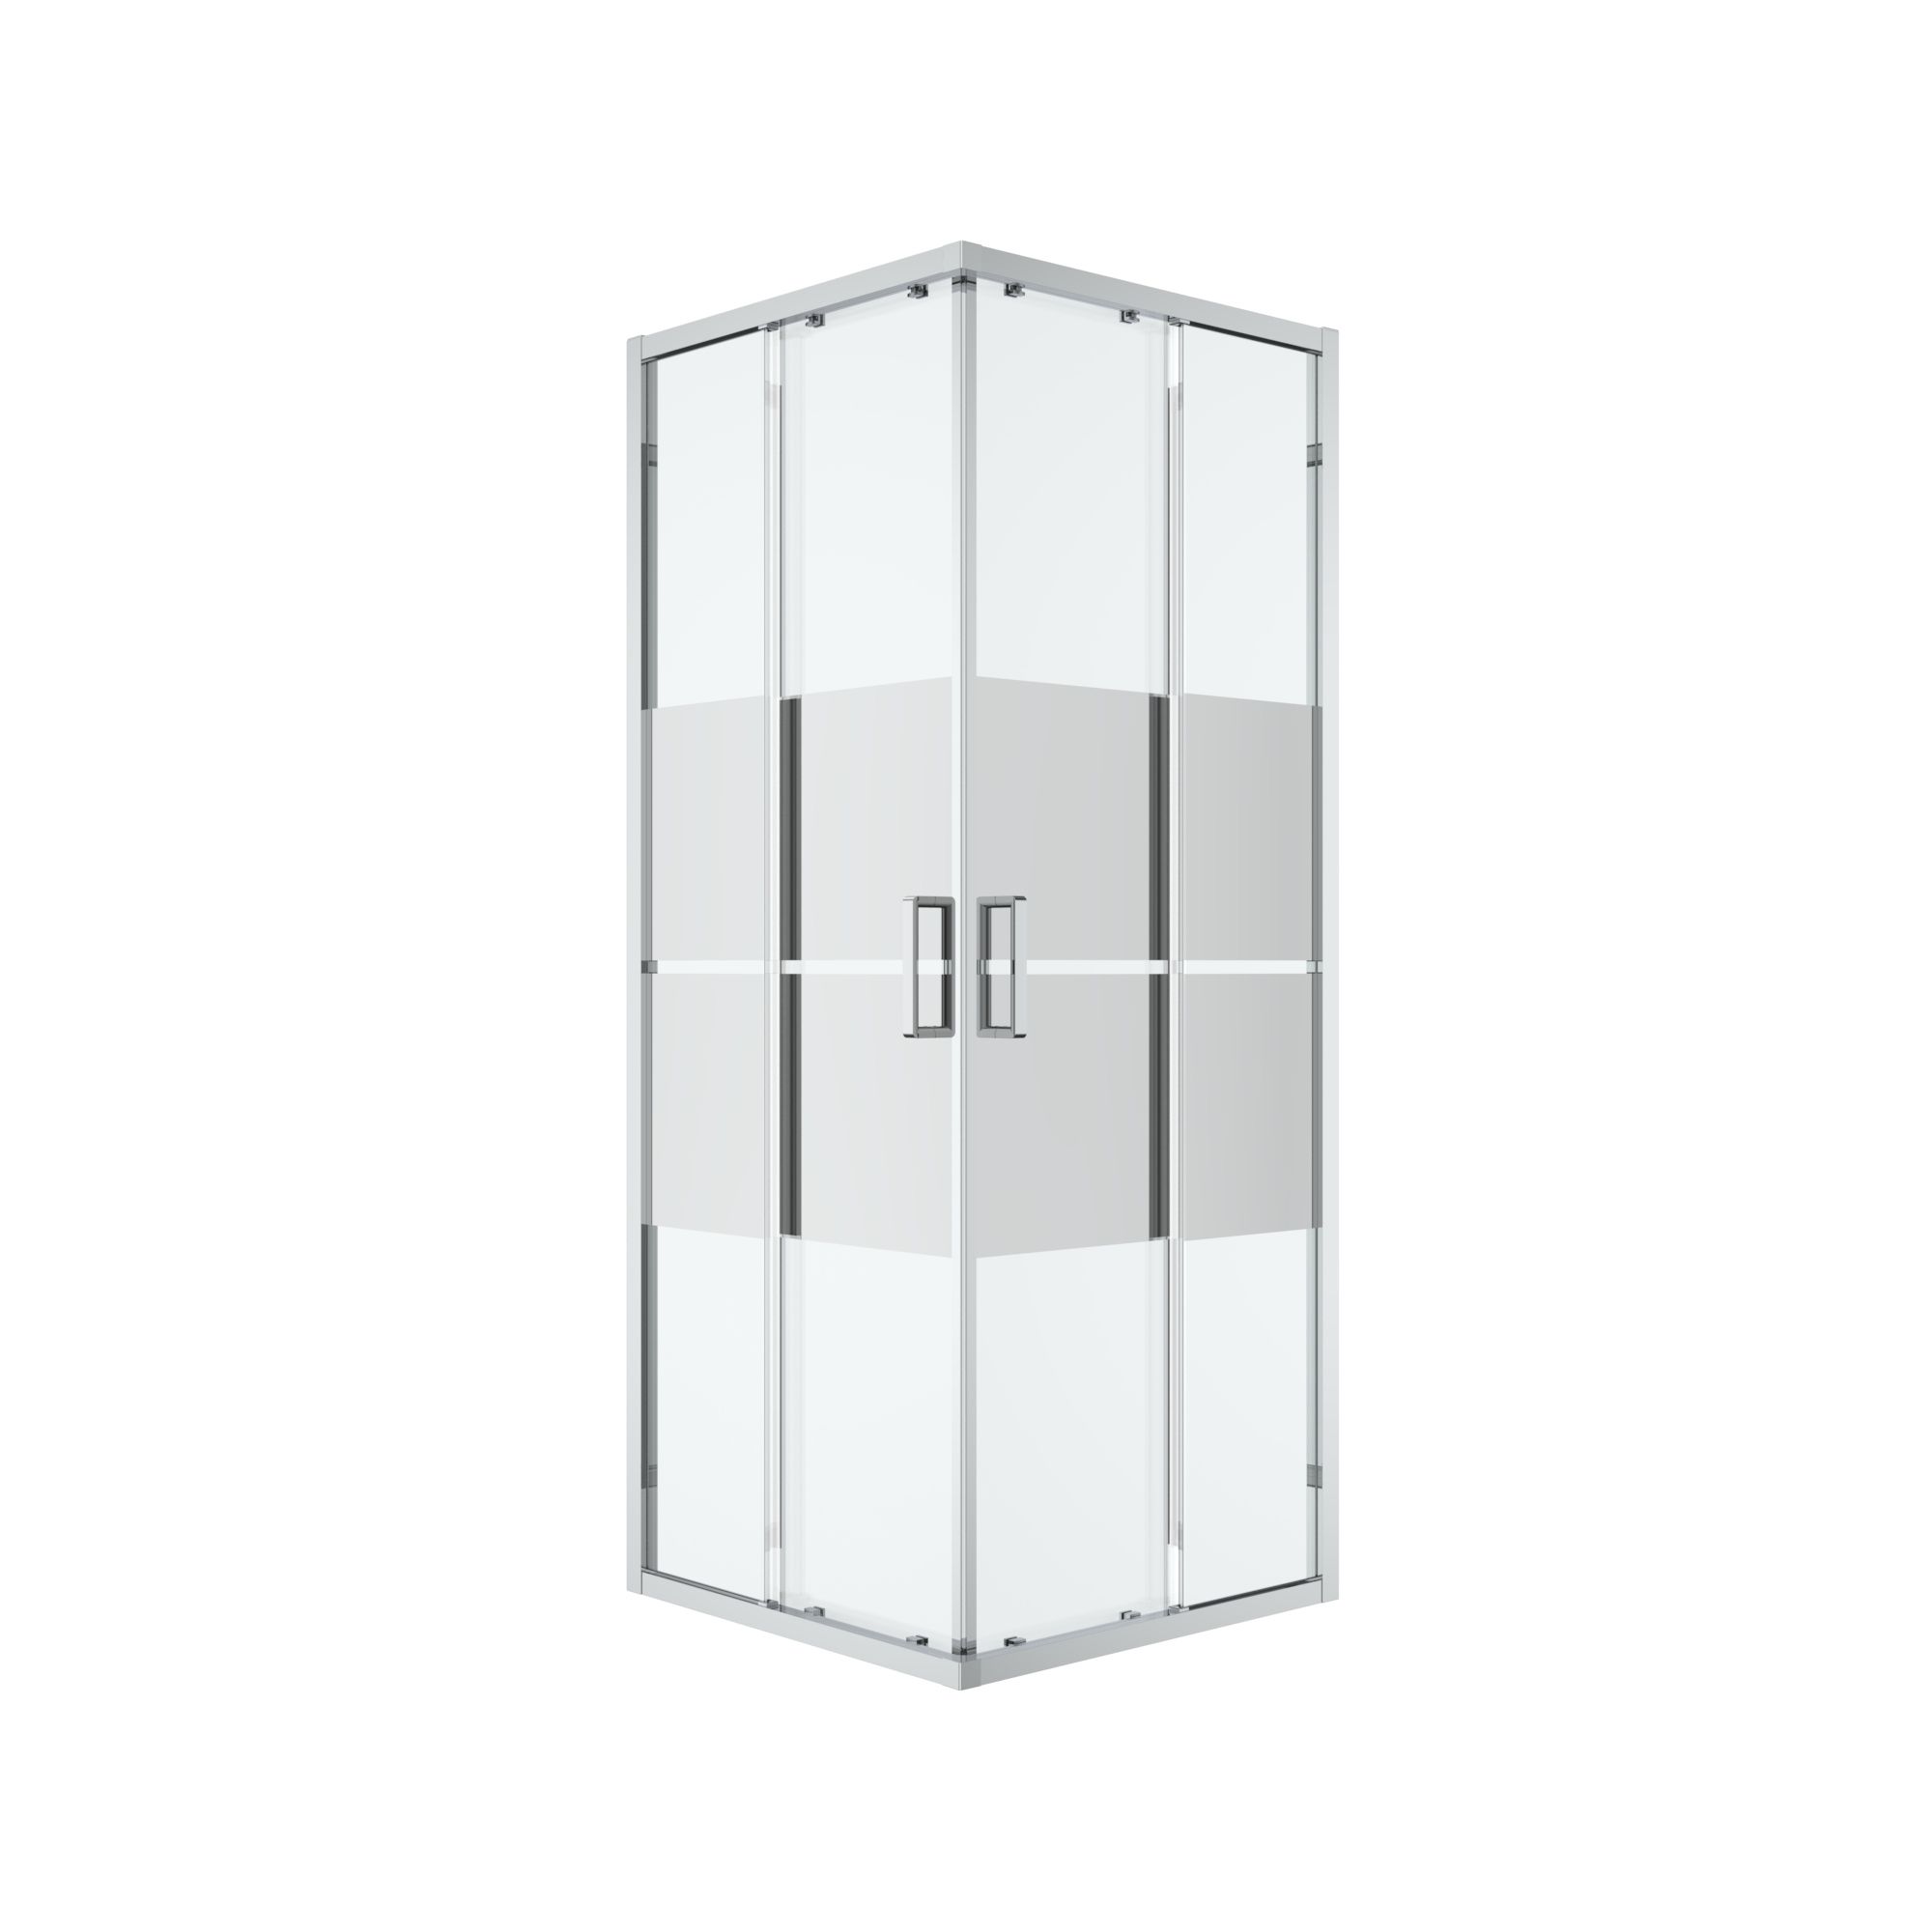 GoodHome Ledava Semi-mirrored Chrome effect Square Shower enclosure - Corner entry double sliding door (W)76cm (D)76cm